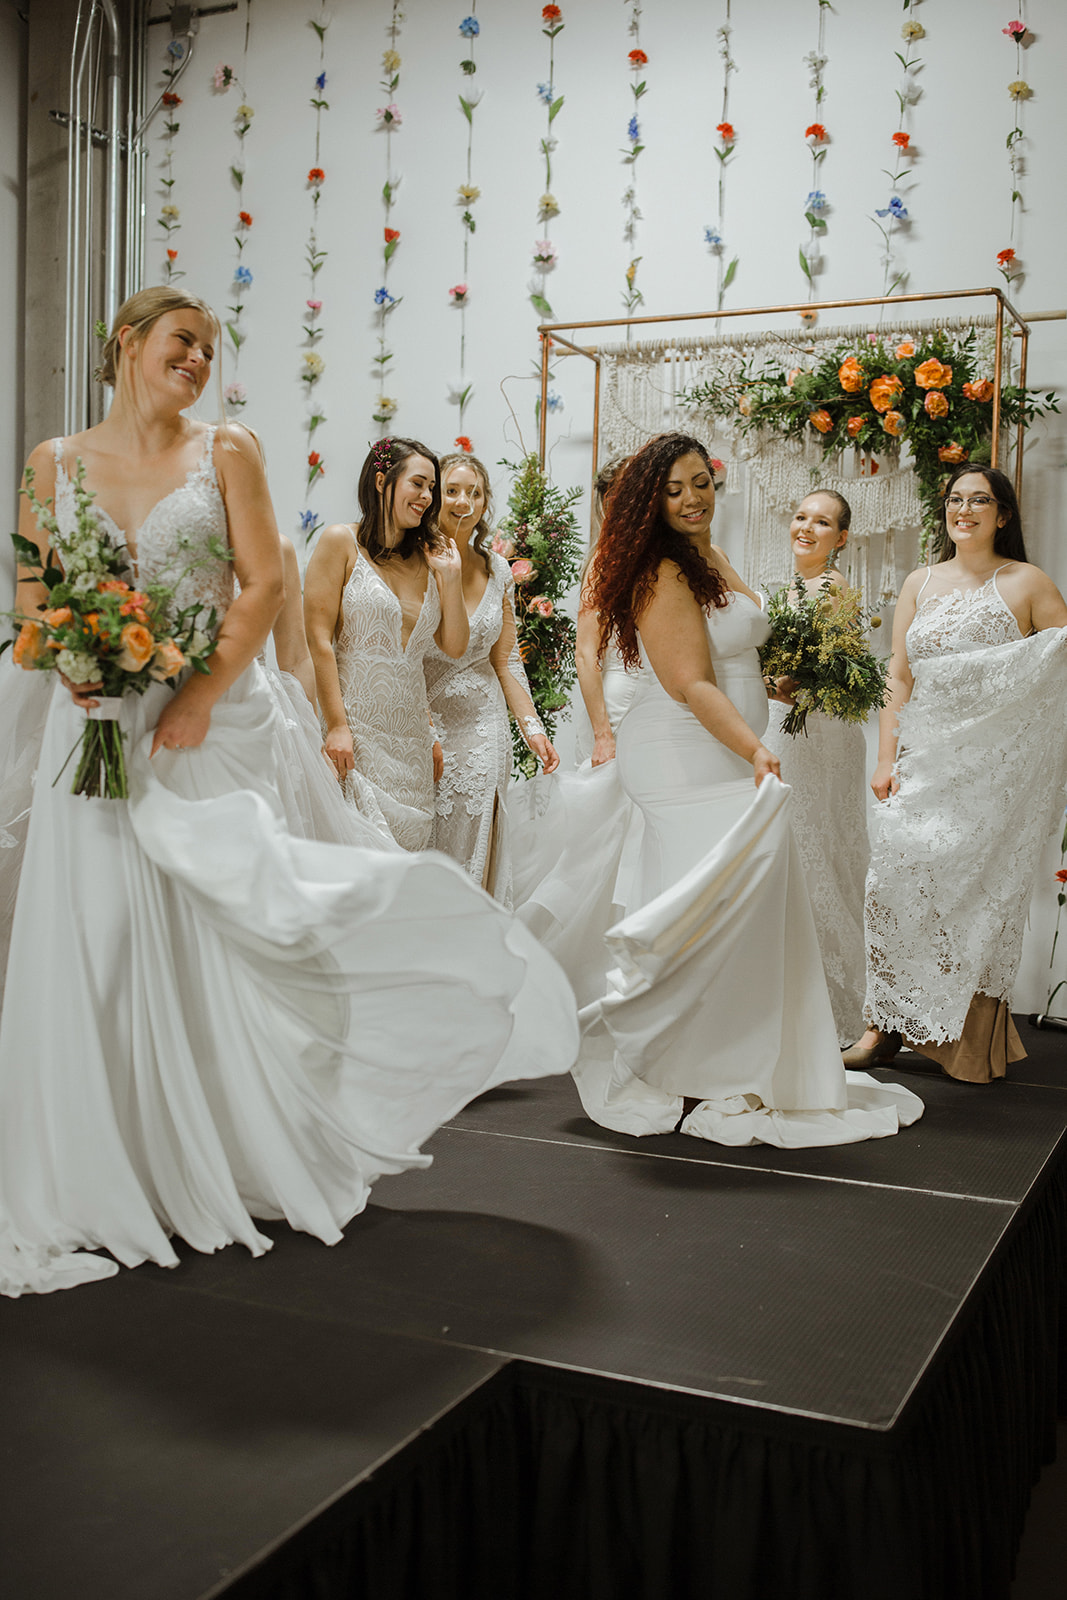 spokane wedding dress all brides fashion show dancing runway